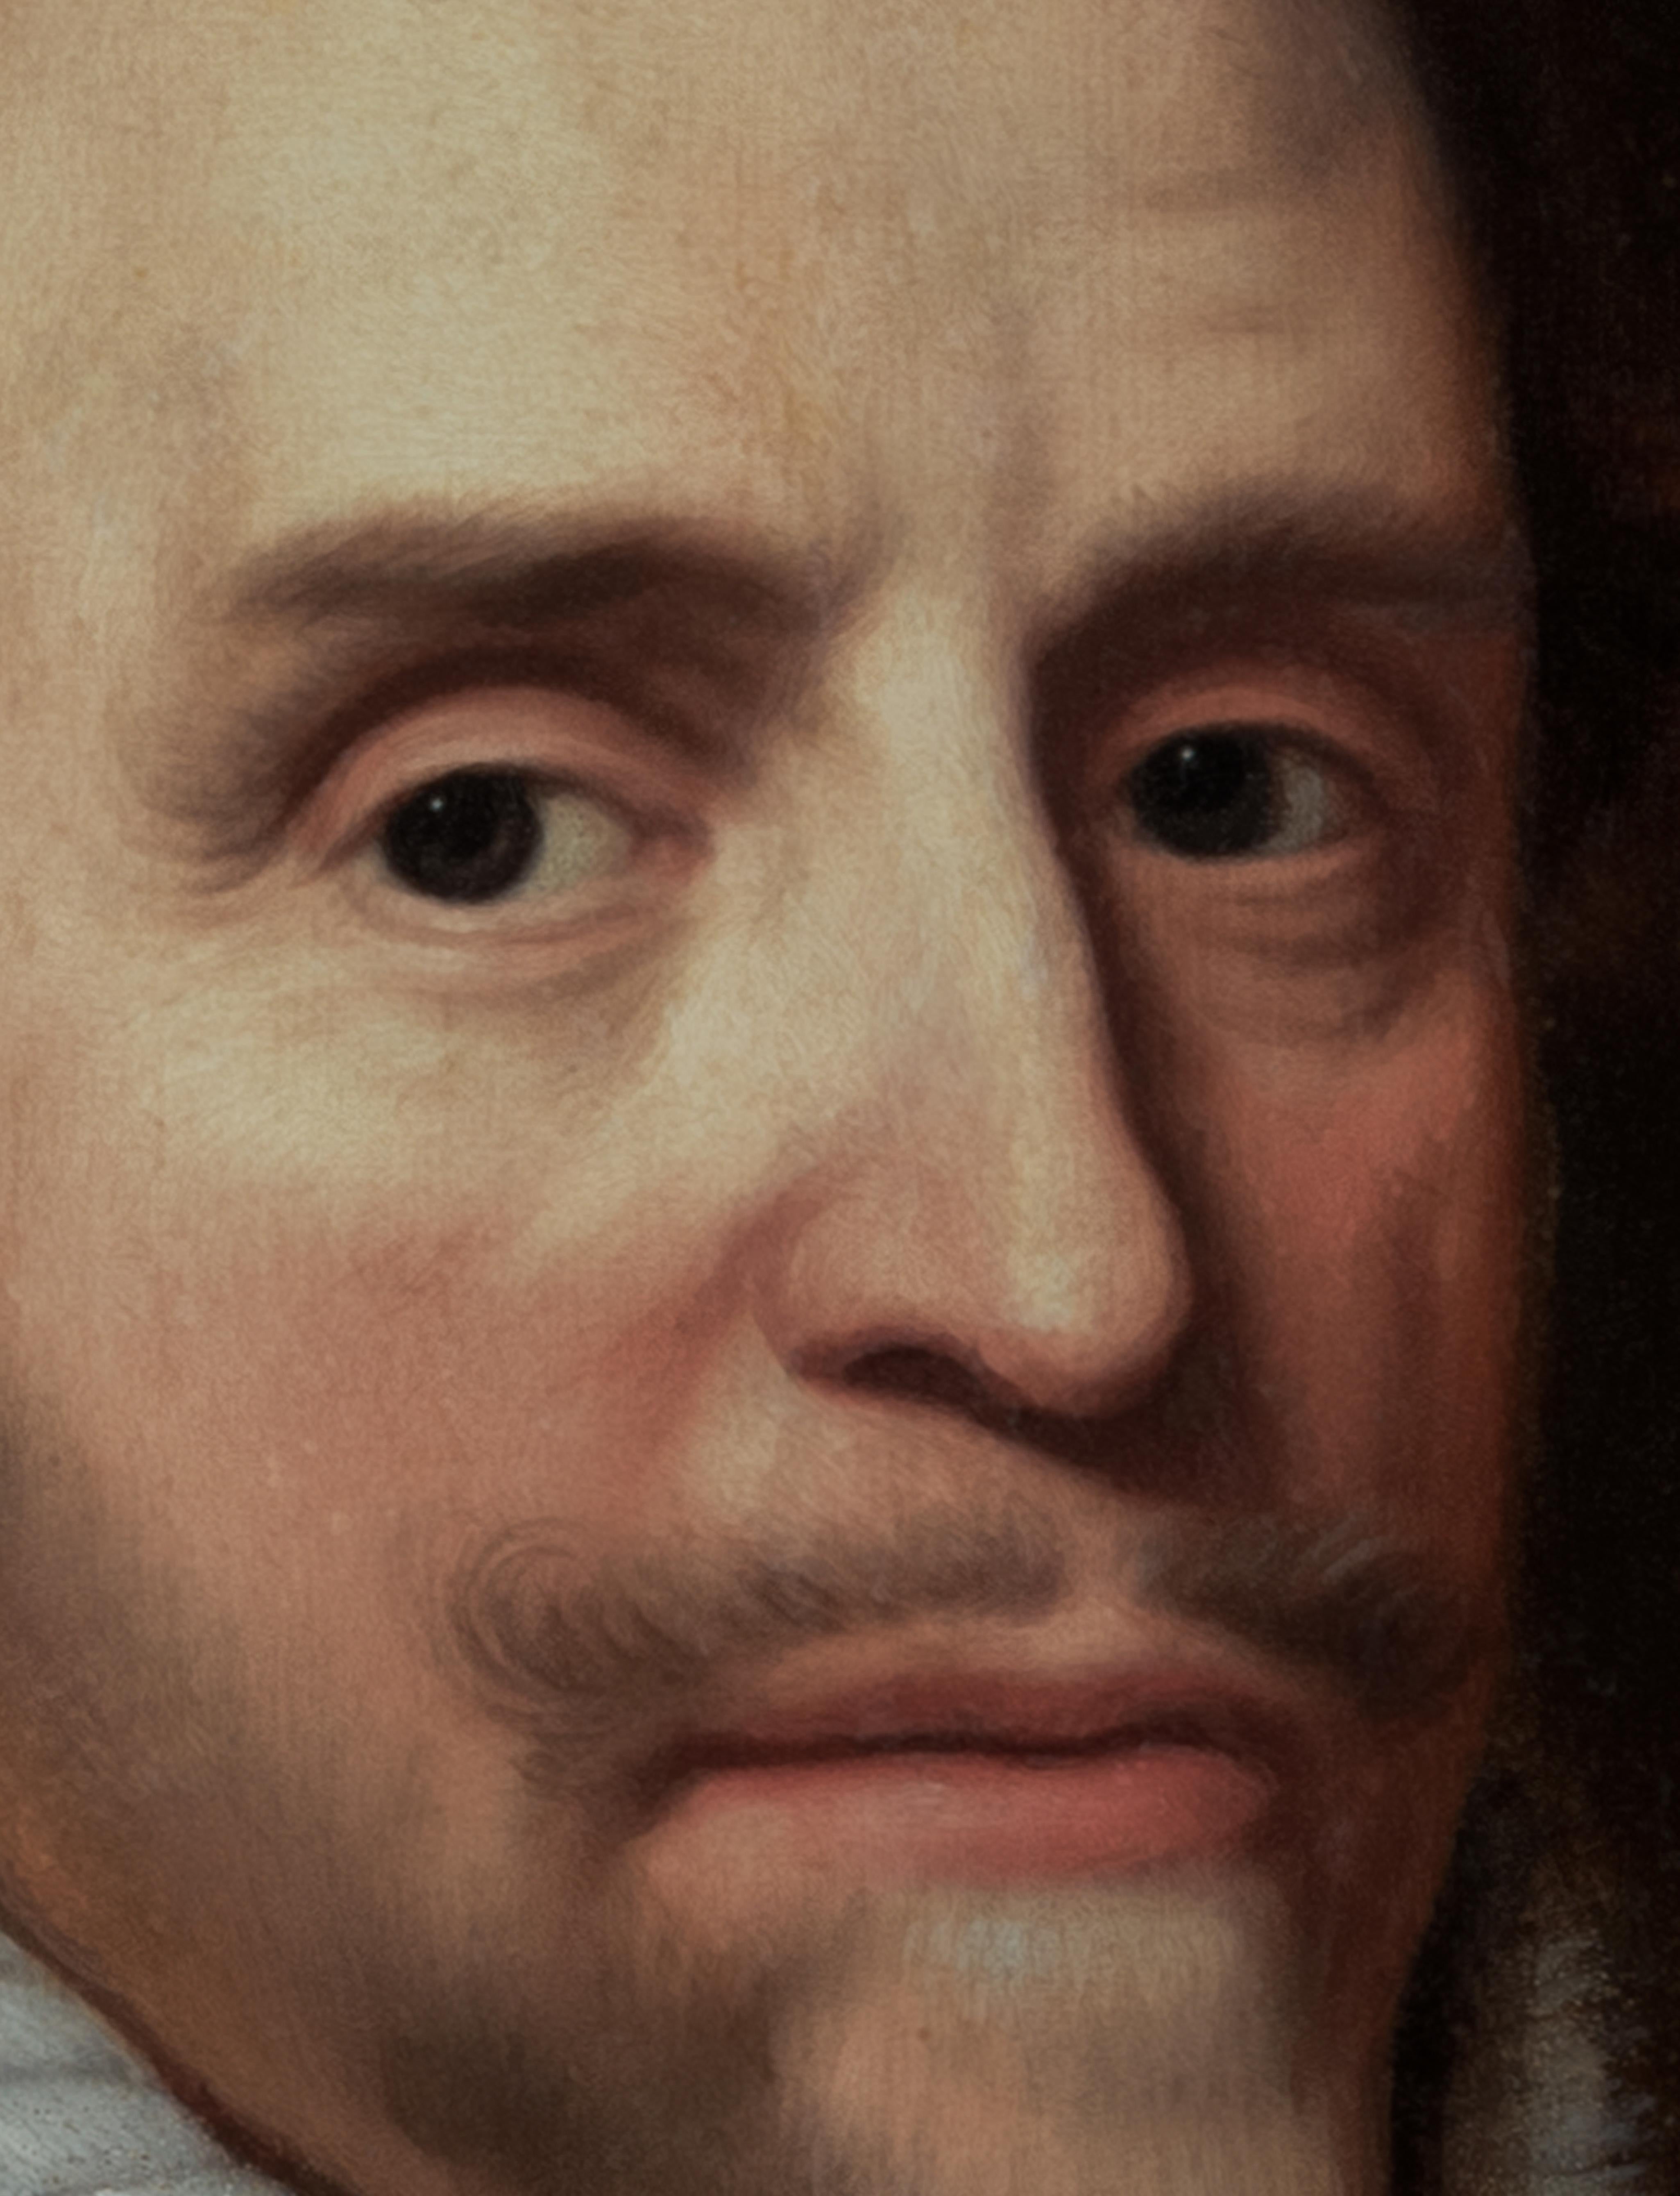 Dutch Old Master Portrait of Maurits, Prince of Orange-Nassau, Oil on Panel  For Sale 3